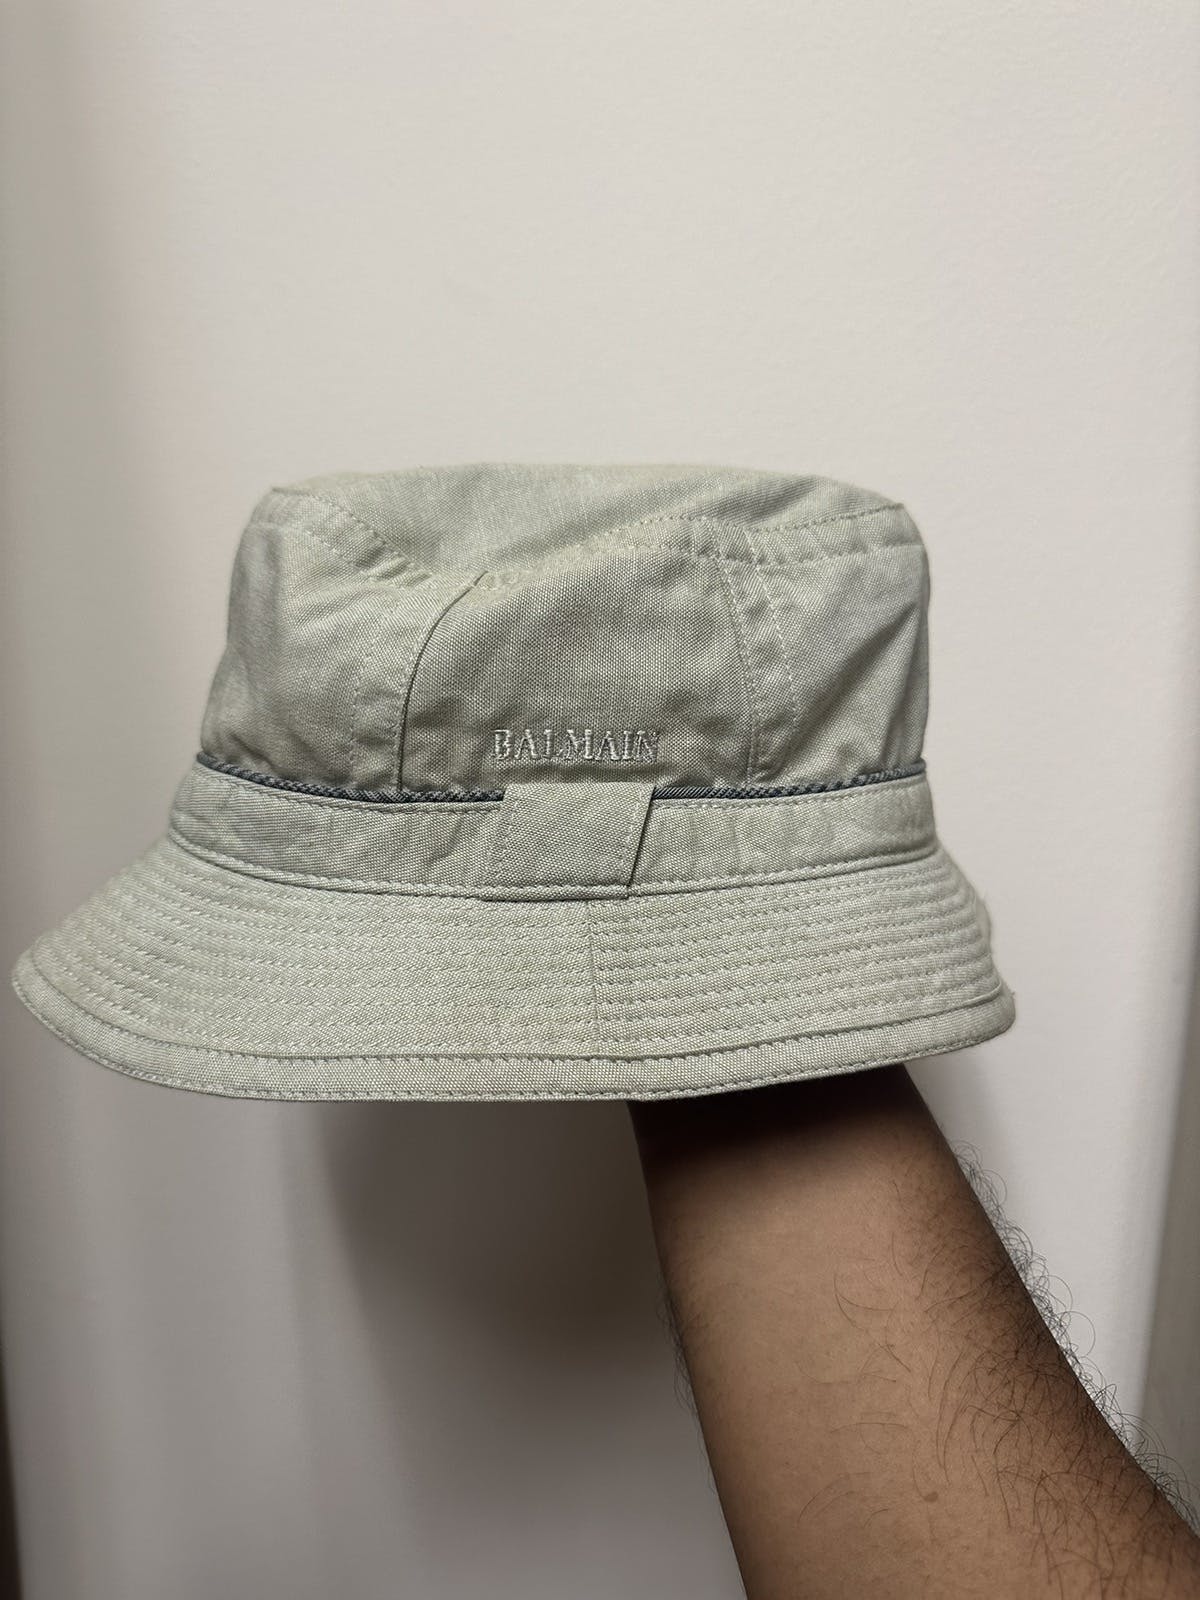 VTG Balmain Bucket Hat - 1